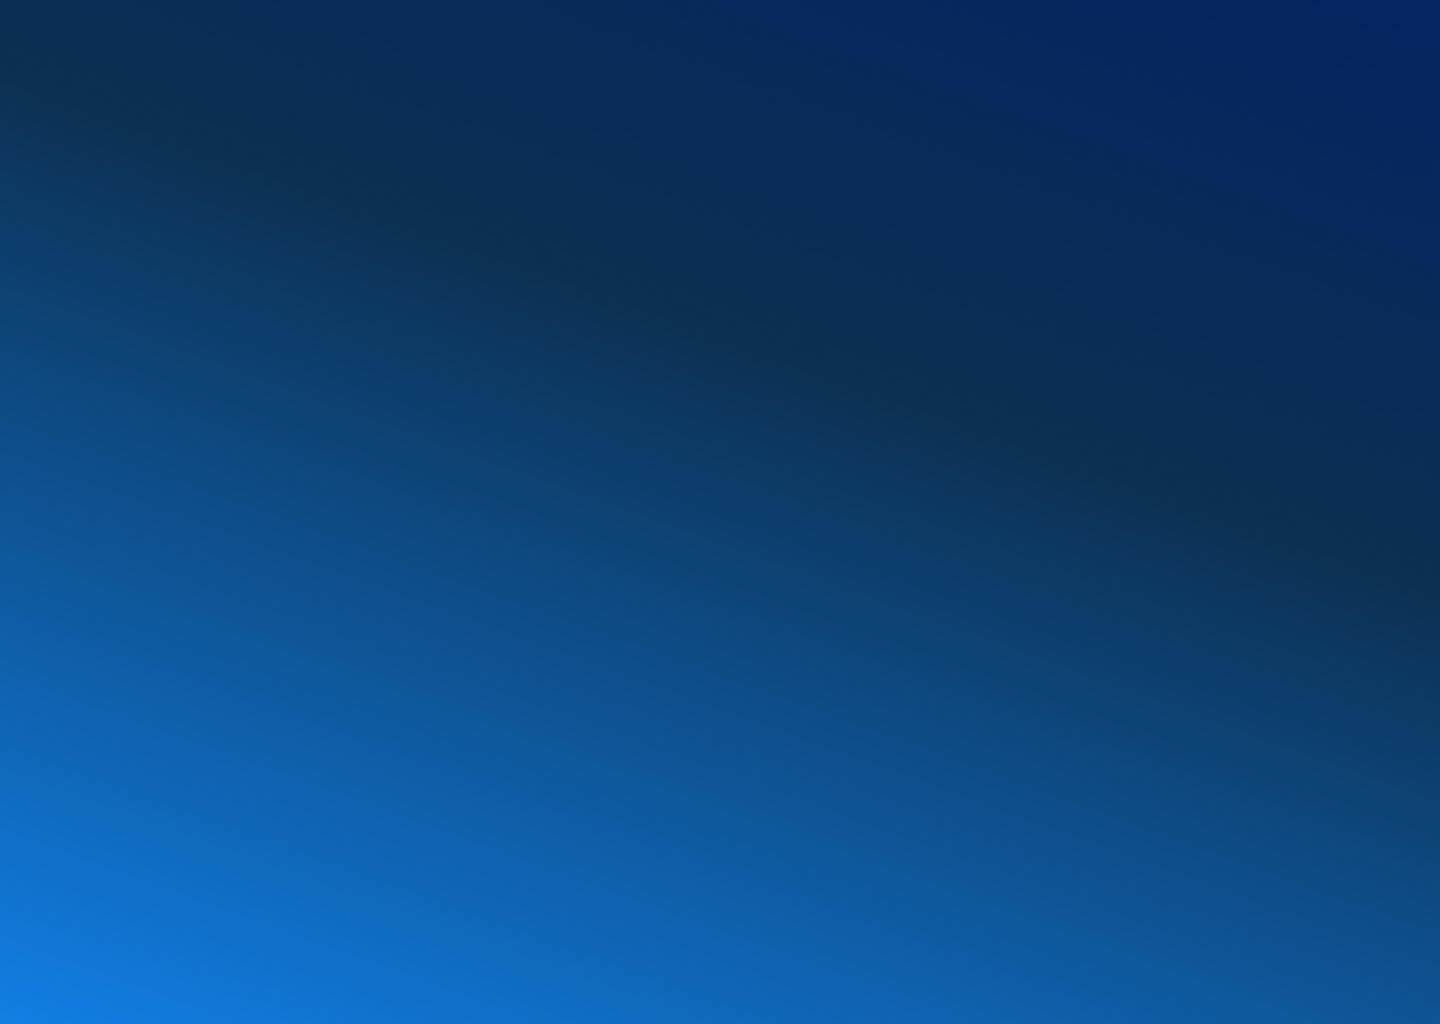 Sunrise Labs - blue rectangle